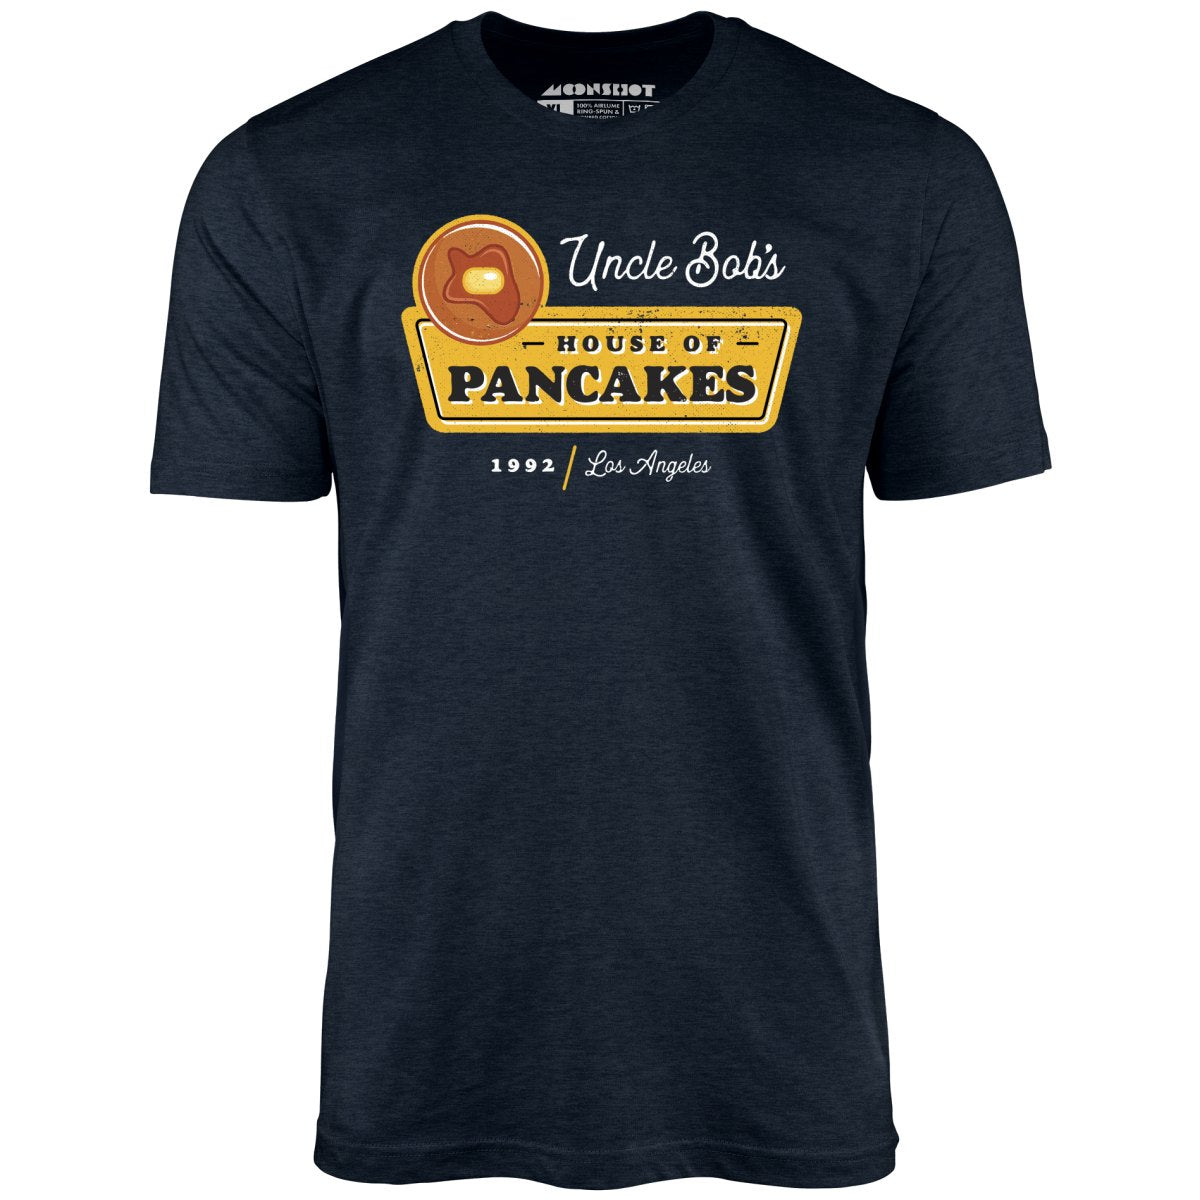 Uncle Bob's House of Pancakes - Reservoir Dogs - Unisex T-Shirt